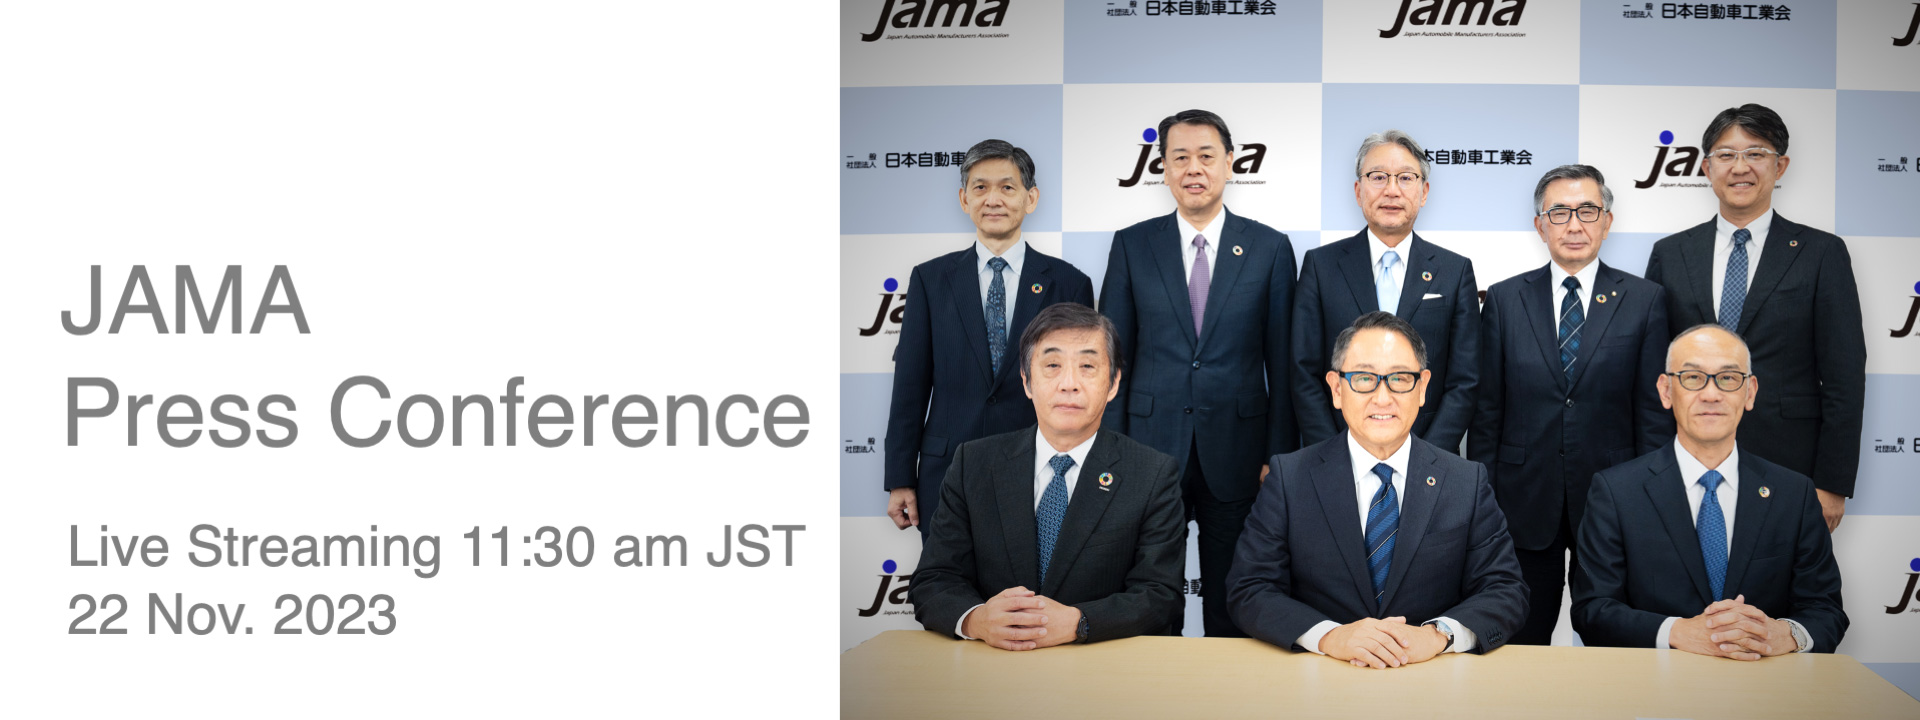 JAMA Press Conference